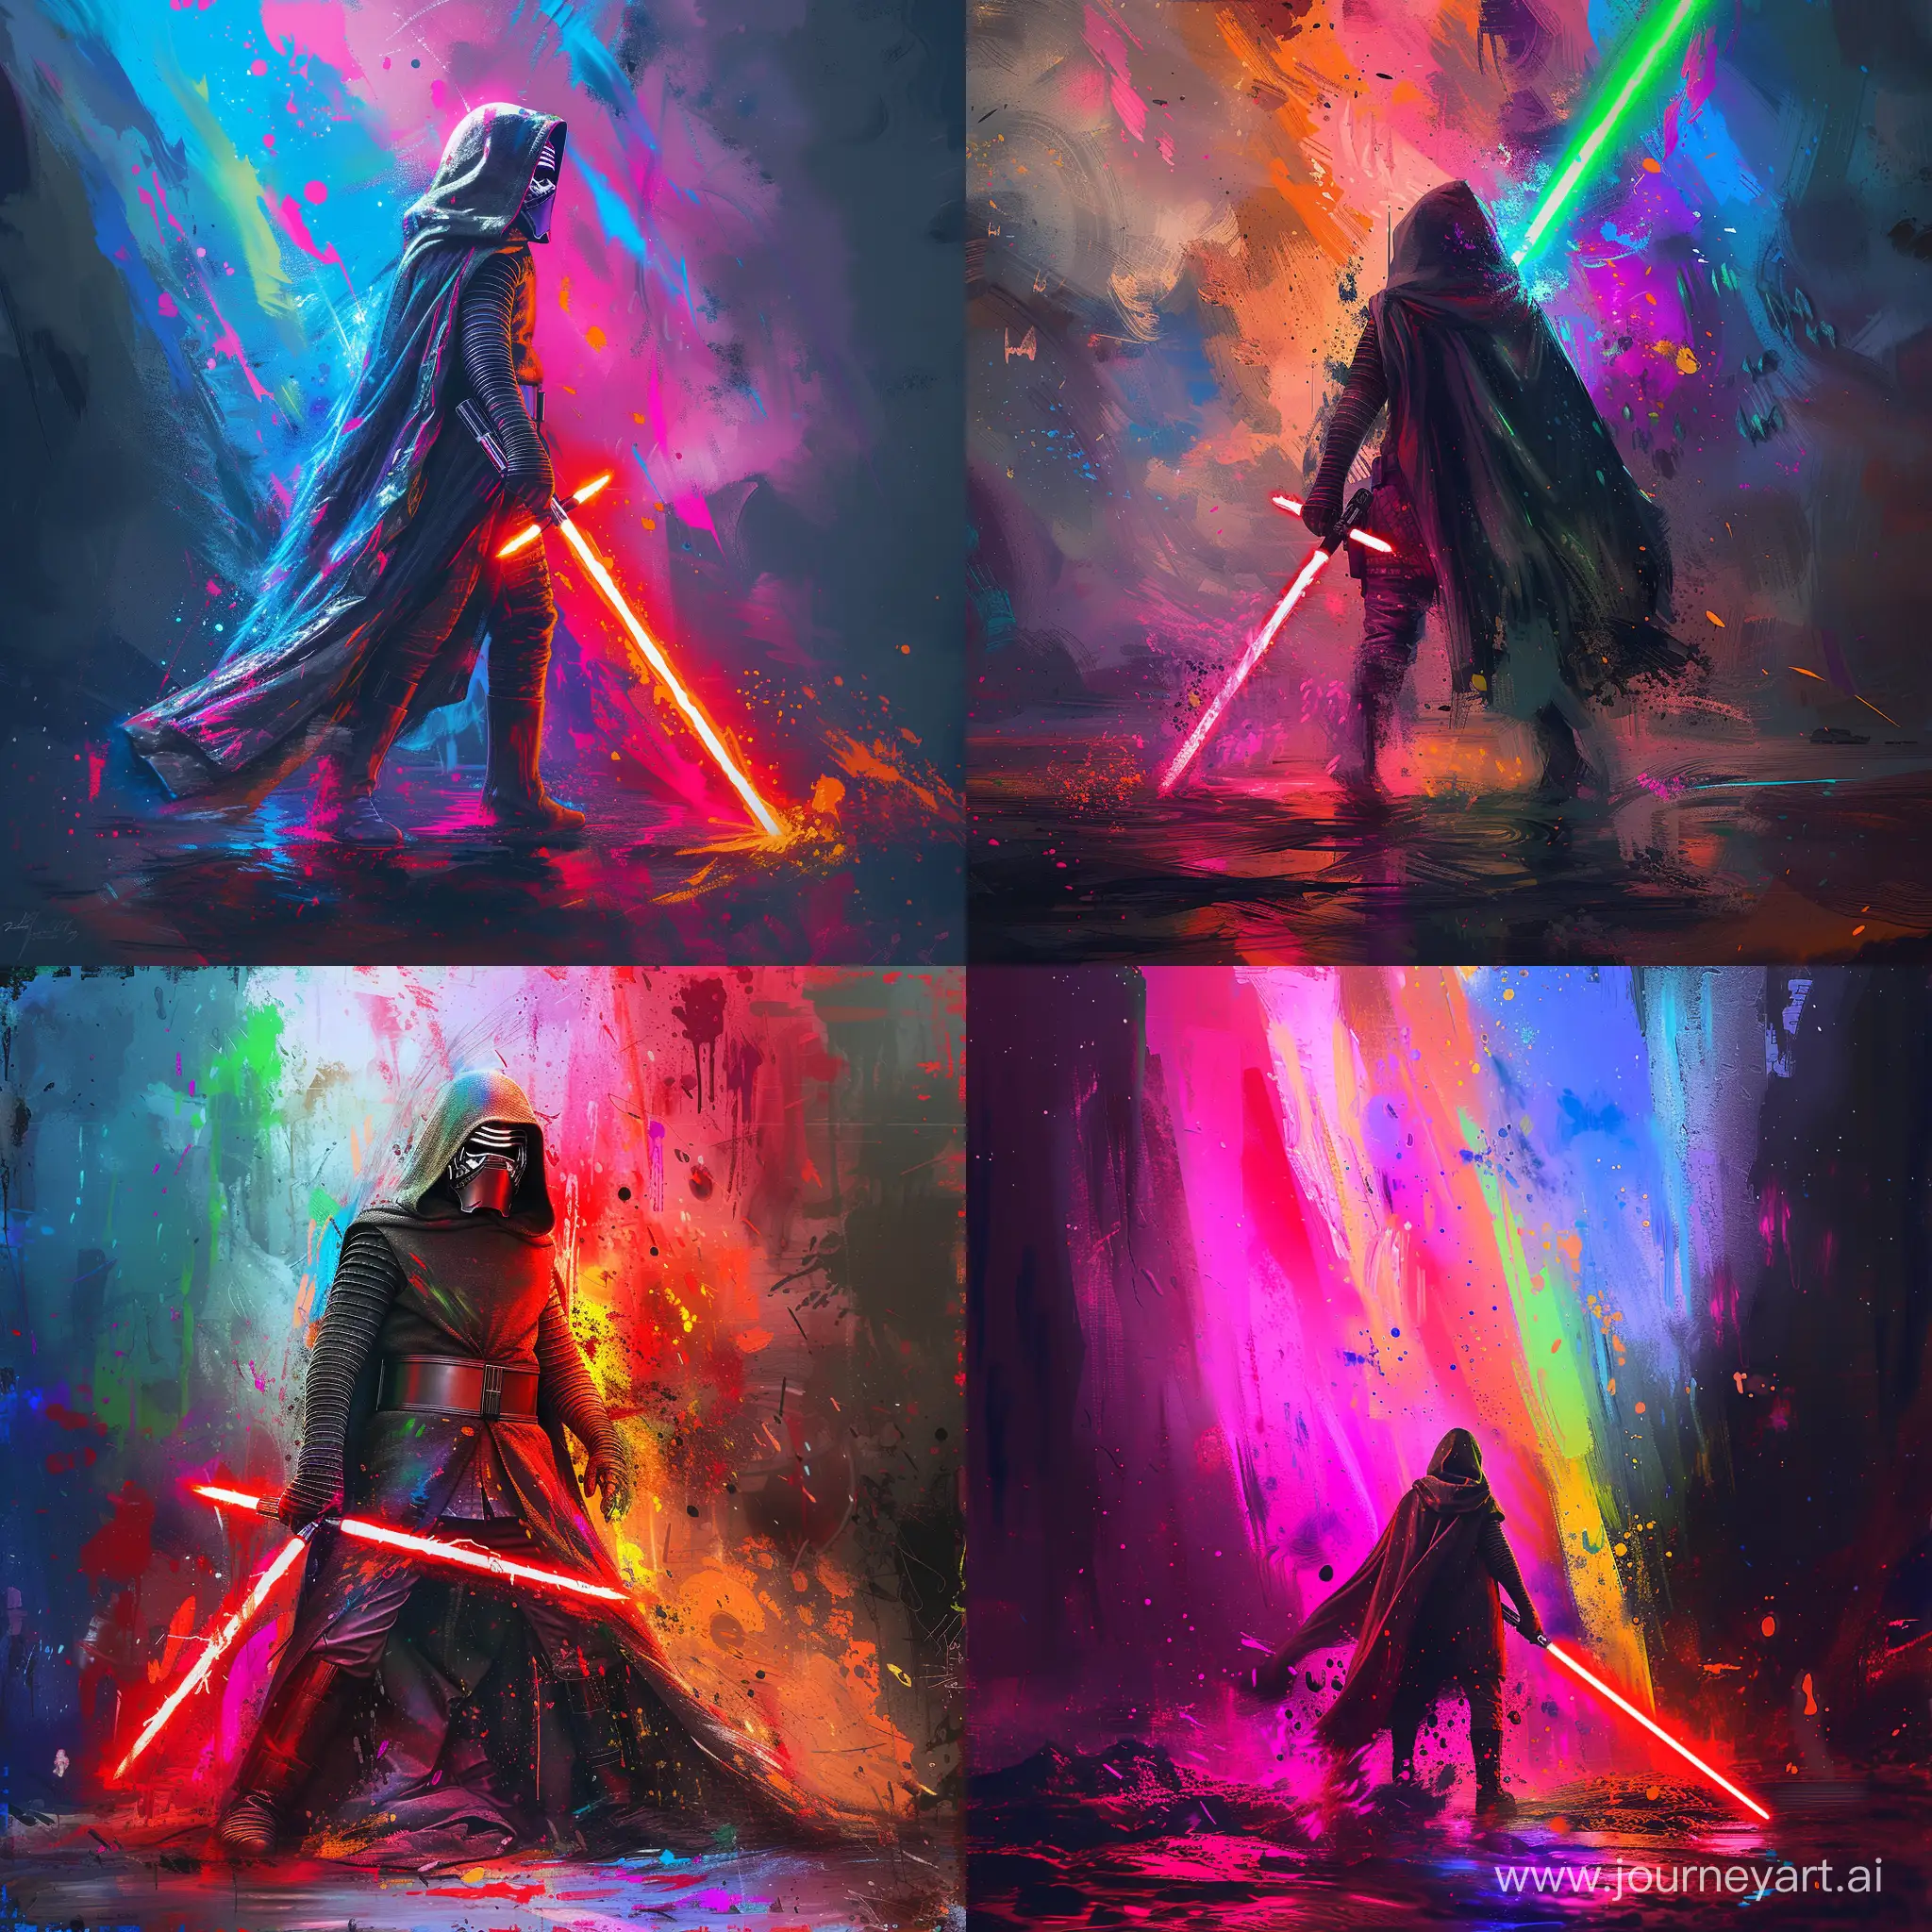 Vibrant-Canvas-Style-Star-Wars-Art-Jedi-Warrior-Wielding-Lightsaber-in-High-Definition